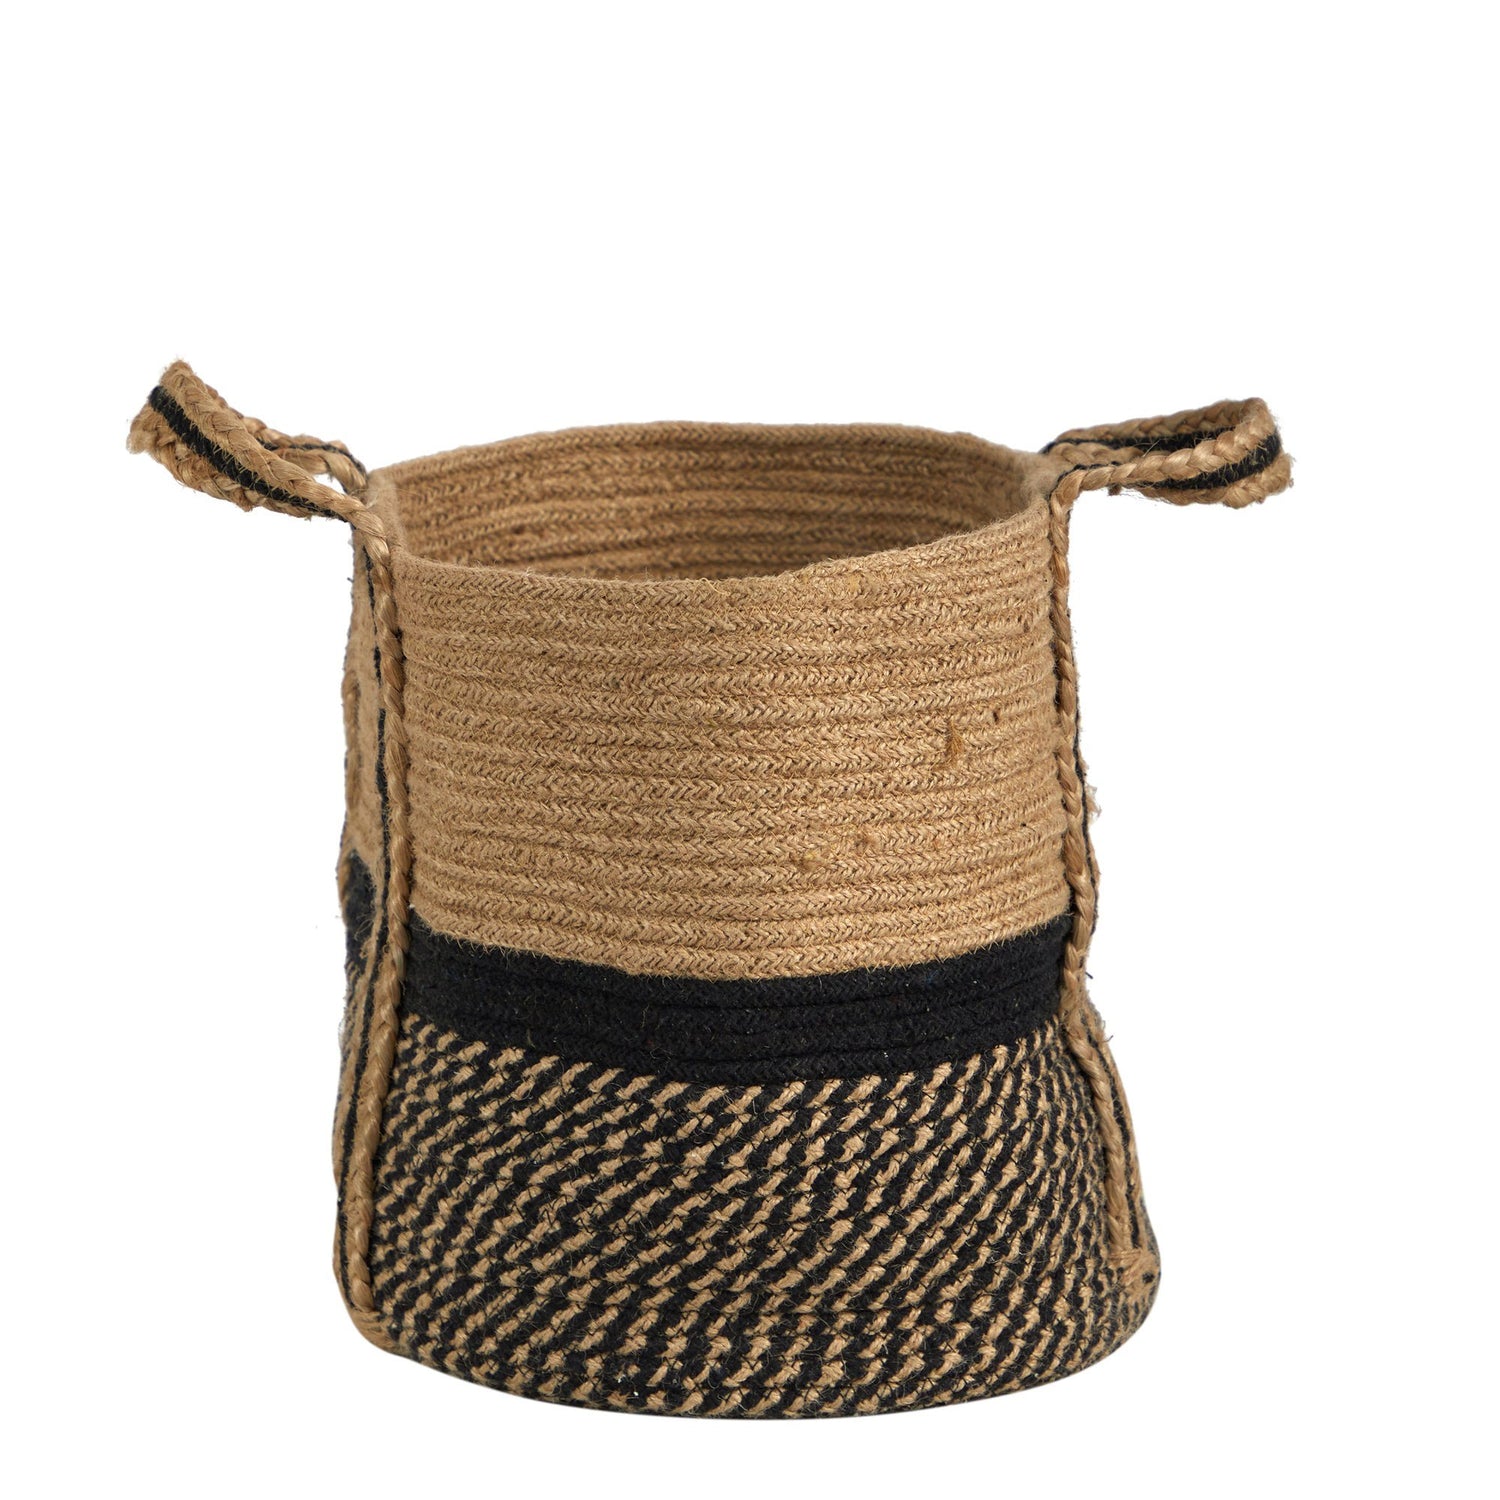 13" Boho Chic Basket Natural Jute Basket Planter, Black Bottom Natural Top with Handles"